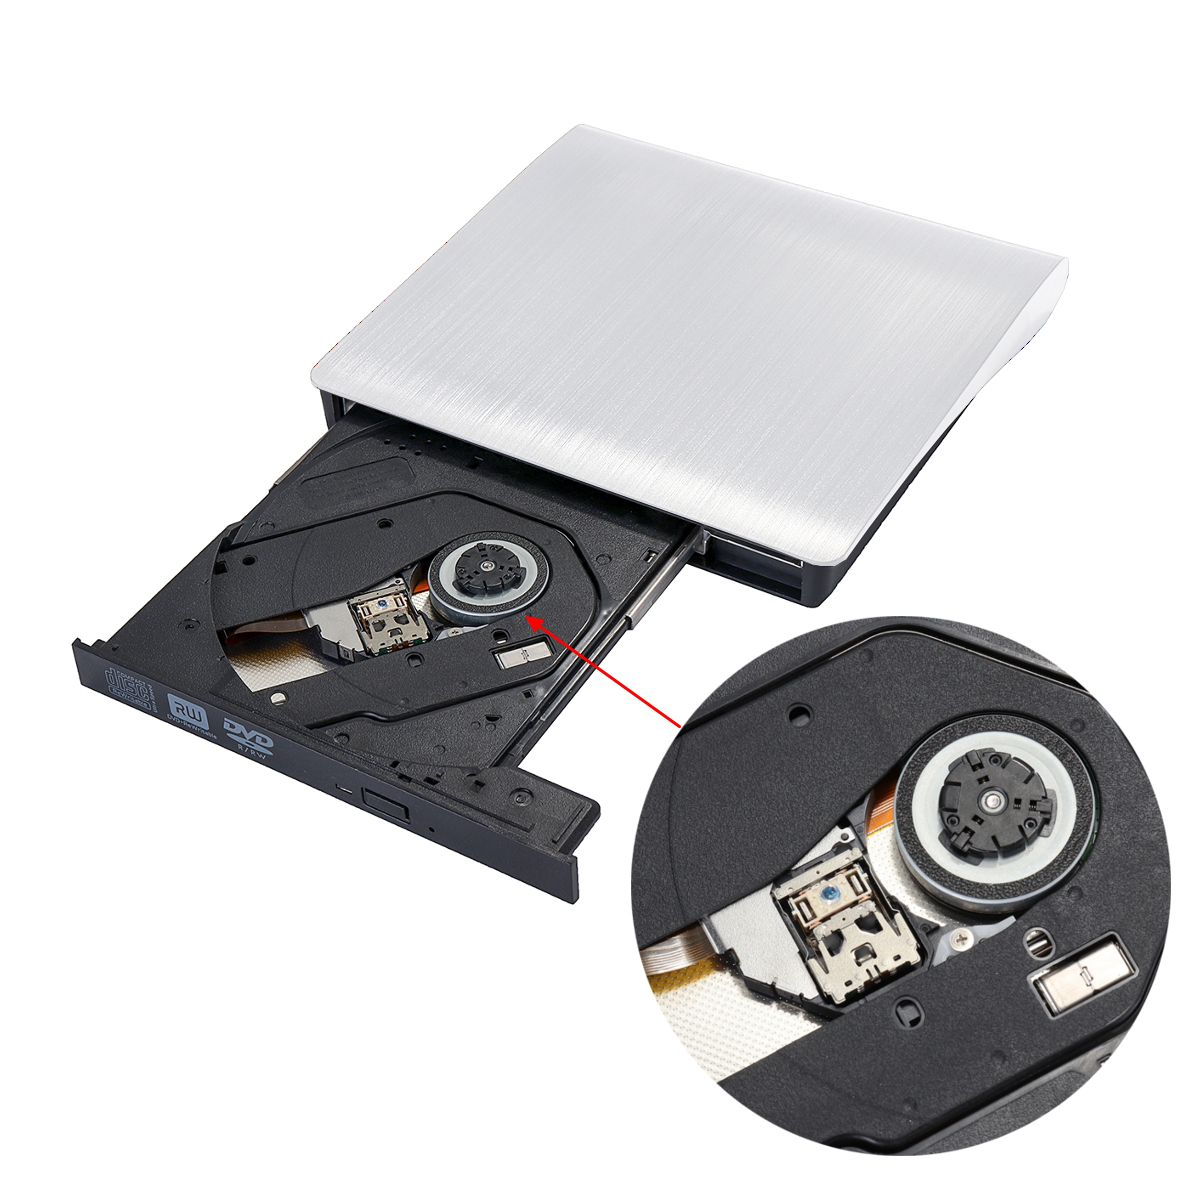 USB 3.0 Slim External DVD Optical Drive DVD-RW CD-RW Combo Drive Burner Reader Player 10